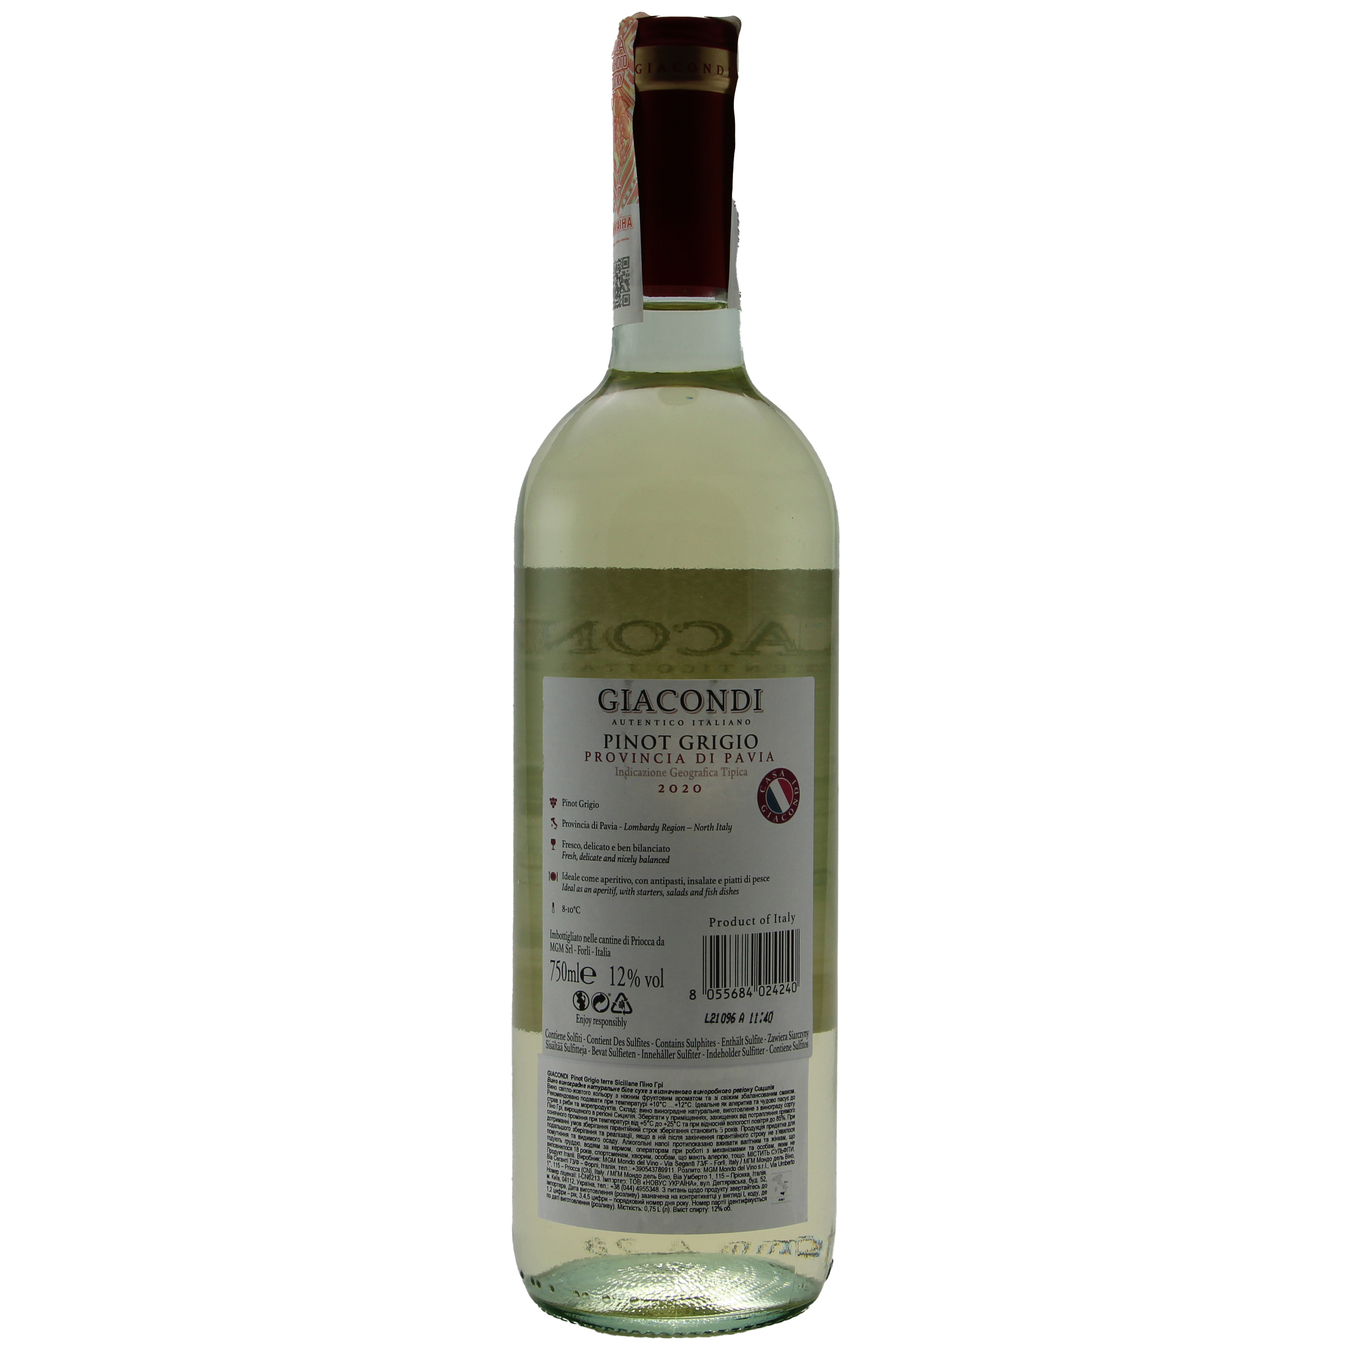 Giacondi Pinot Grigio Delle Venezie White Dry Wine IGT 12%0,75l 2